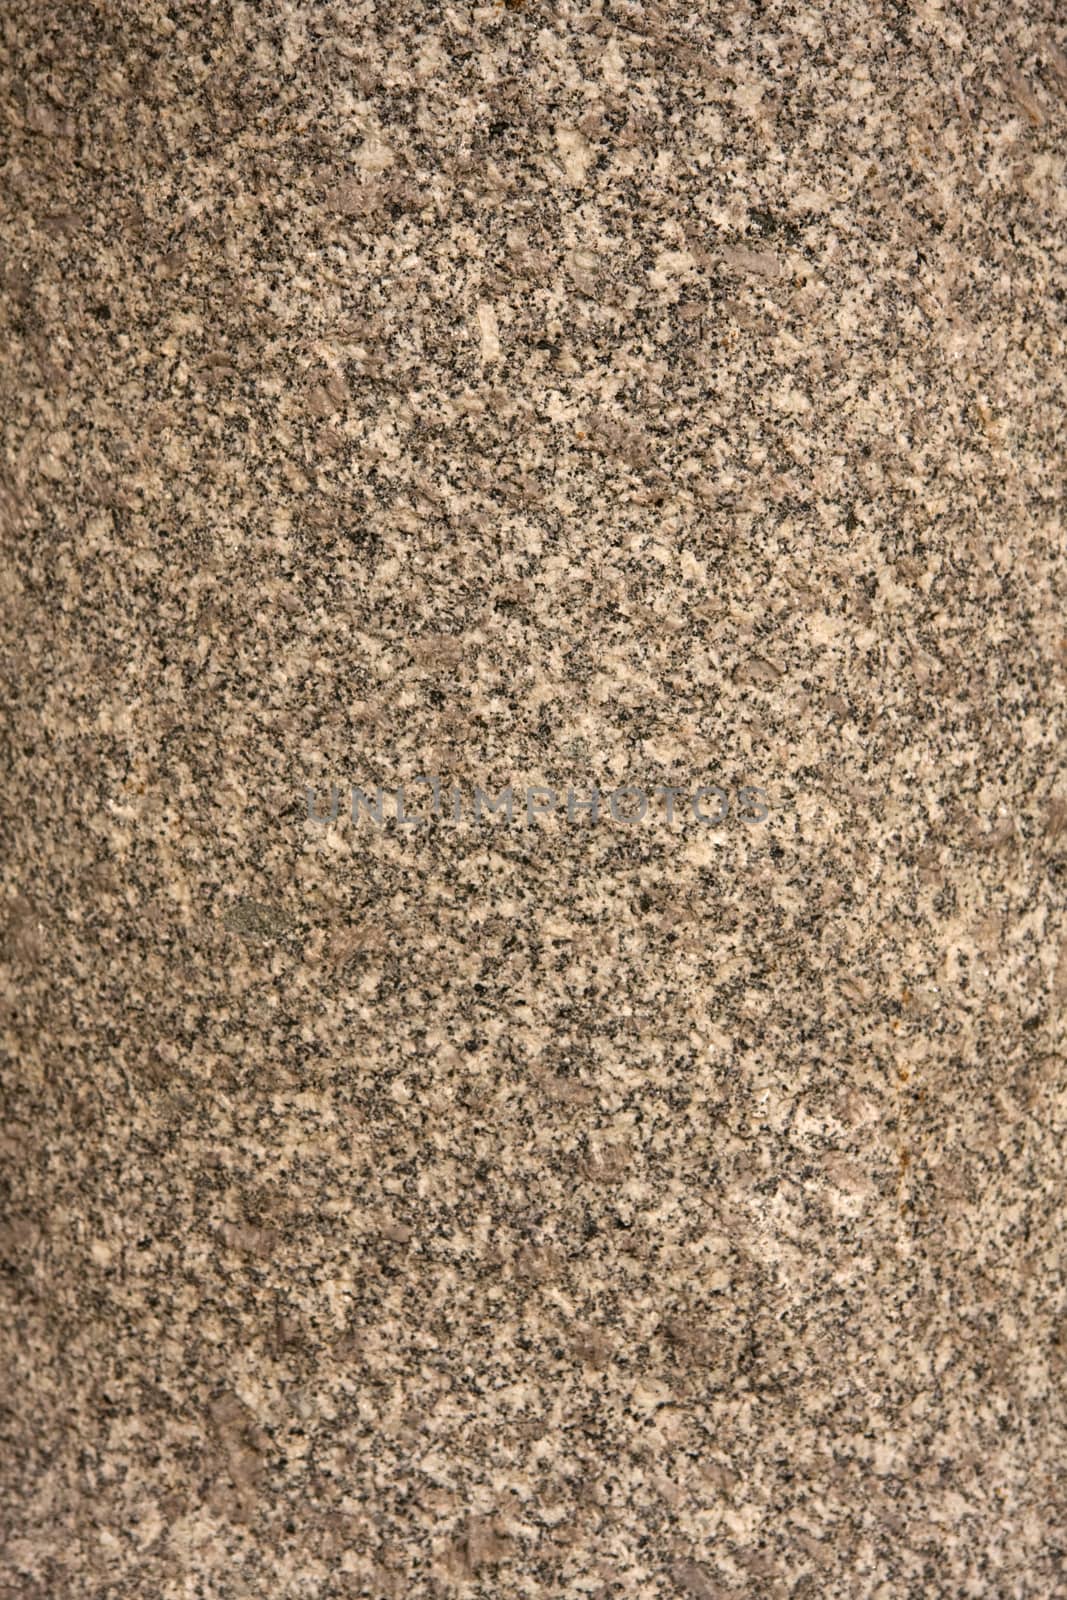 Grainy Granite background by fotoecho